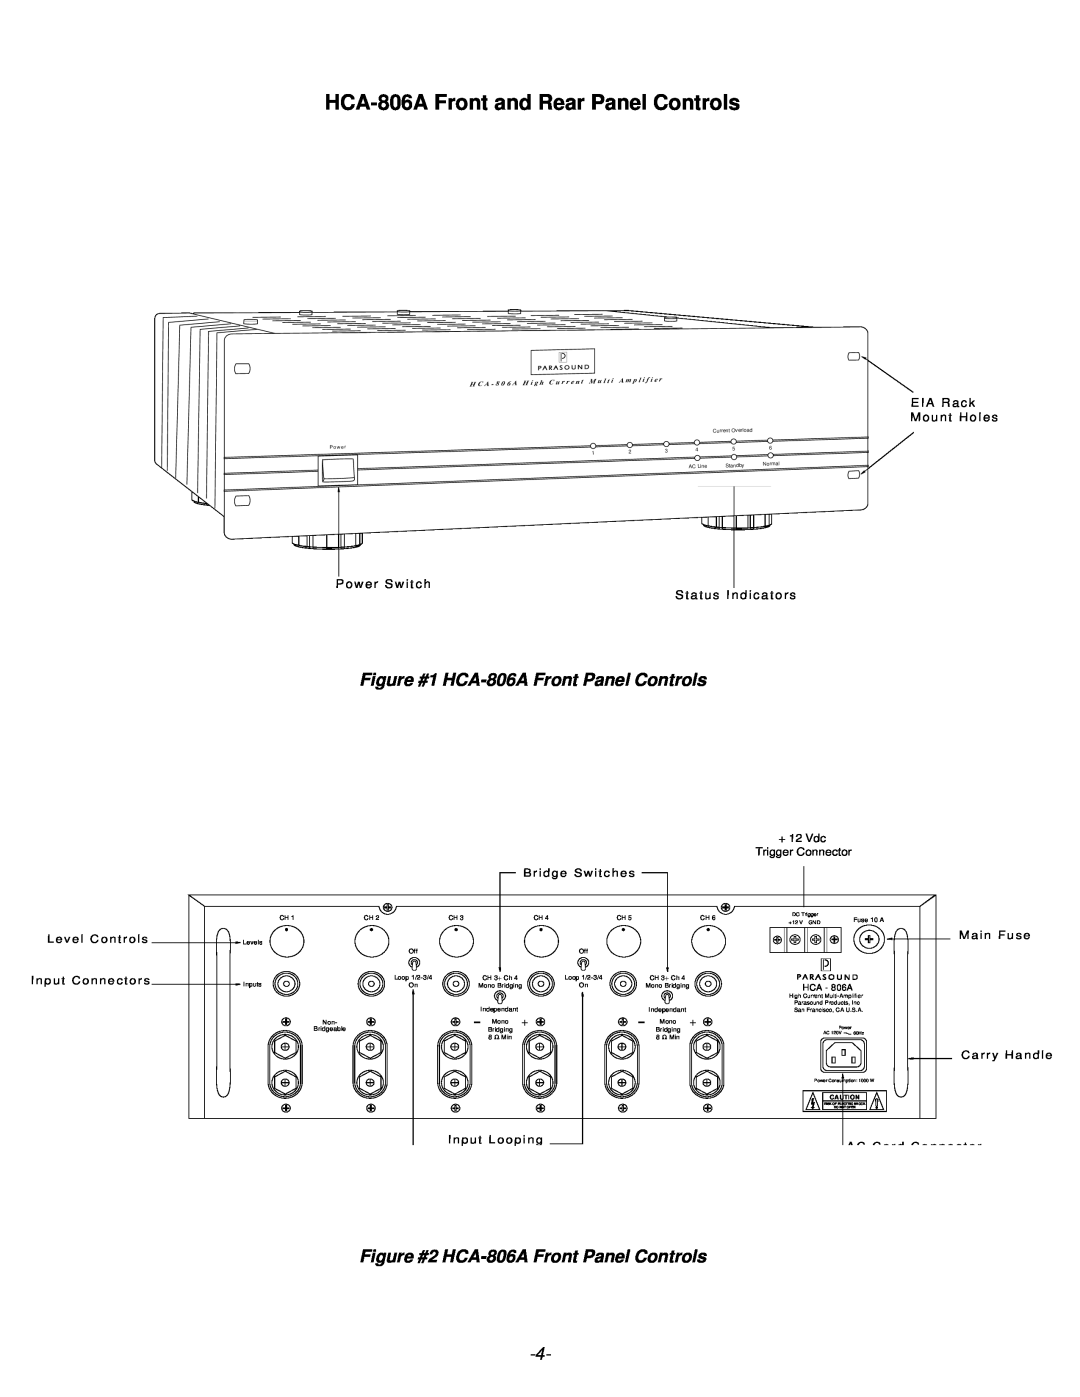 Parasound HCA 806A HCA-806AFront and Rear Panel Controls, Figure #1 HCA-806AFront Panel Controls, E I A R a c k 